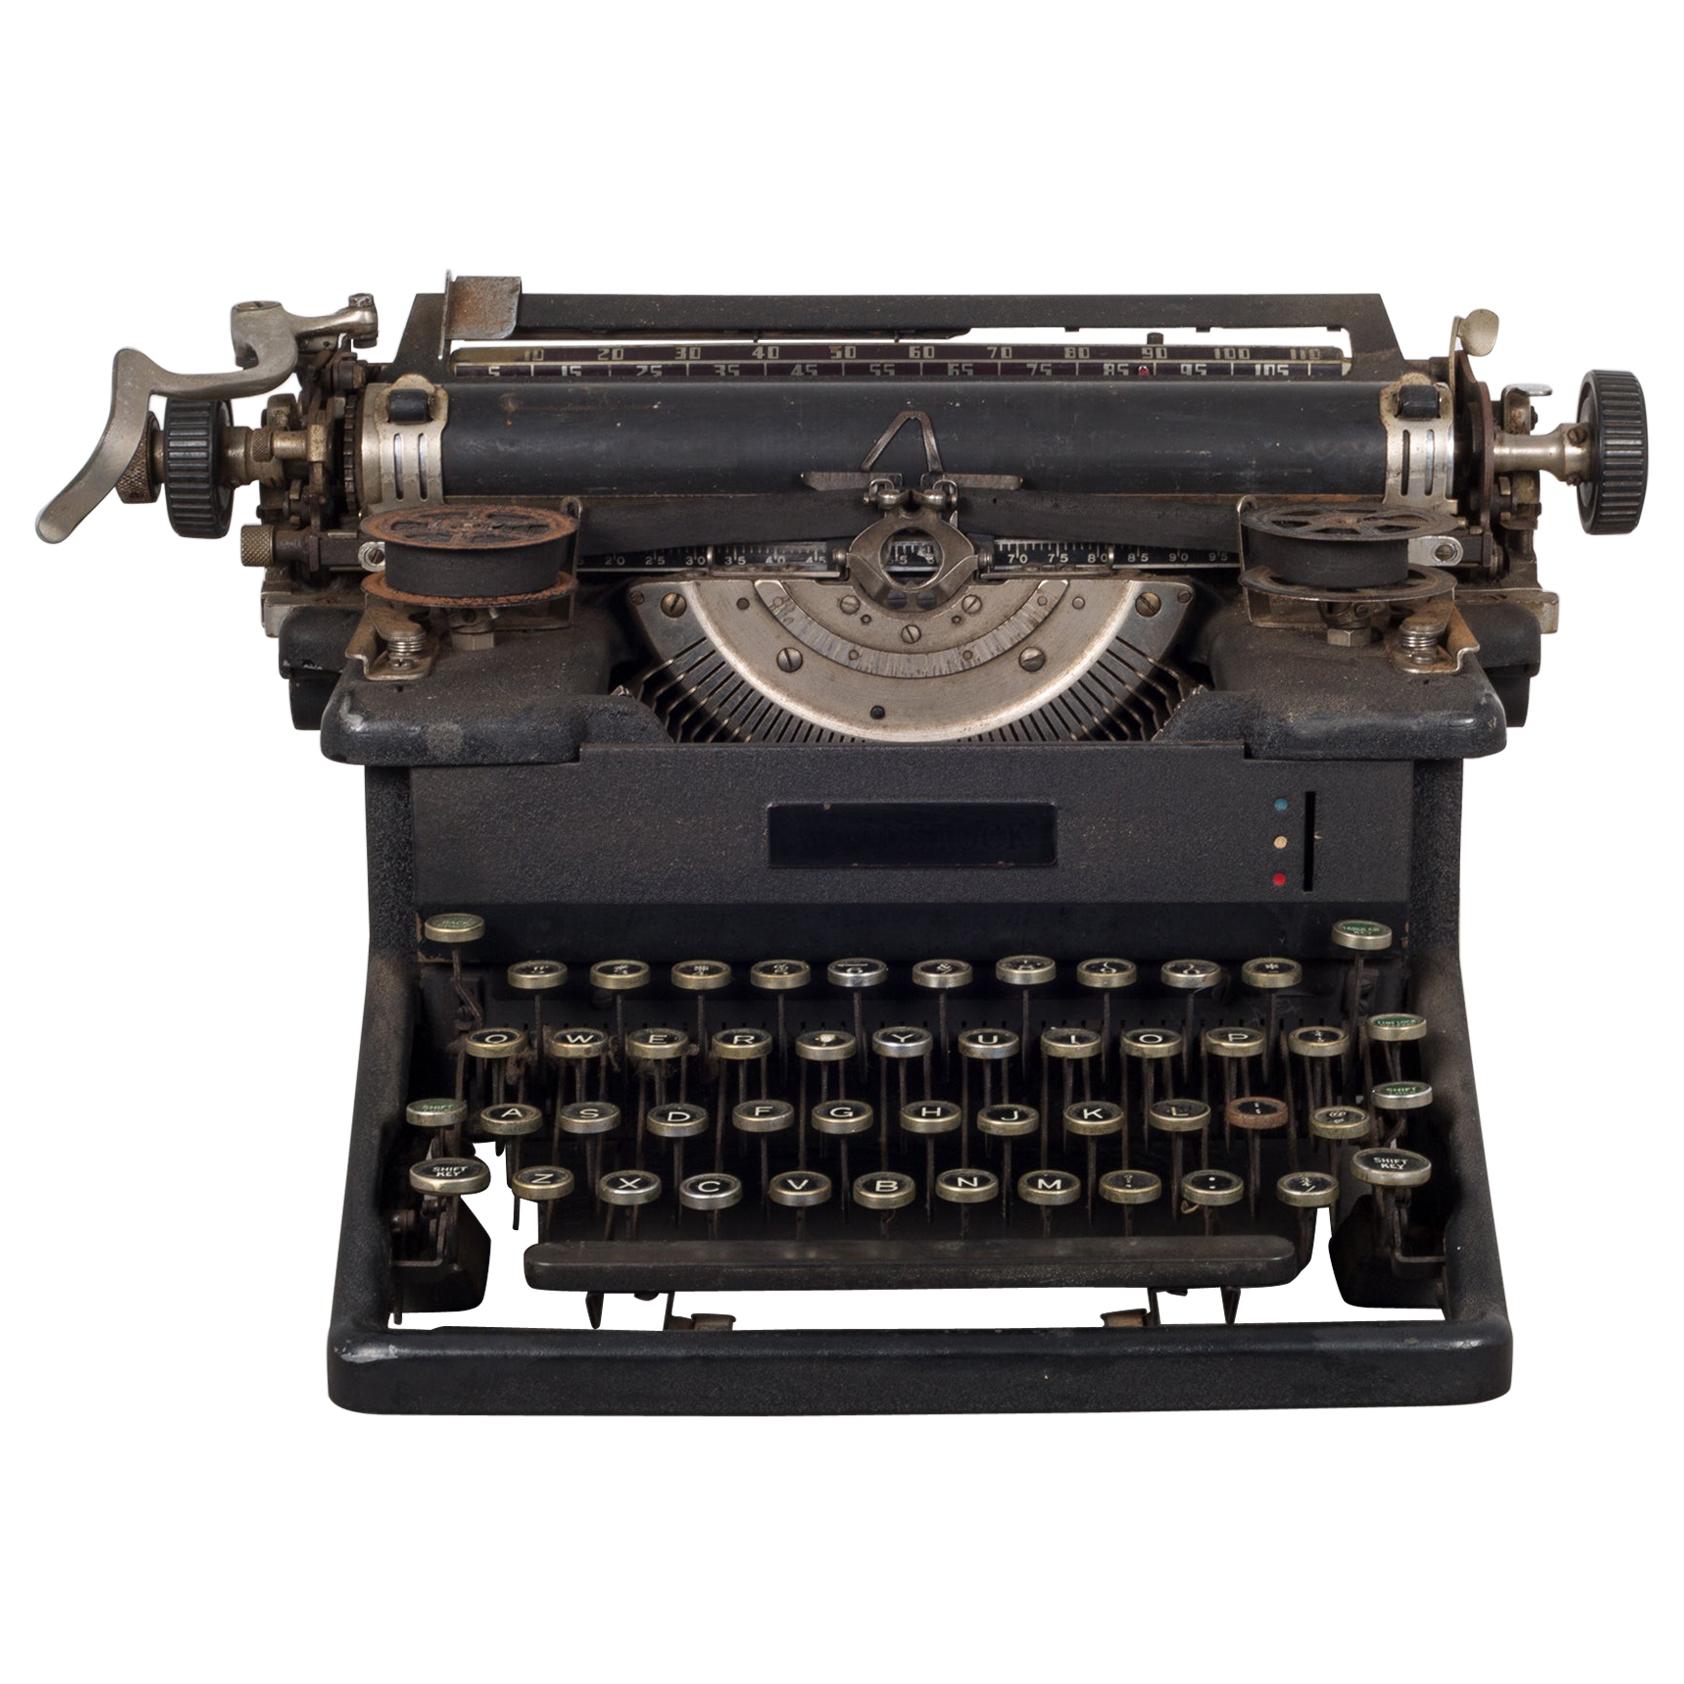 Antique Woodstock Typewriter #5, circa 1933